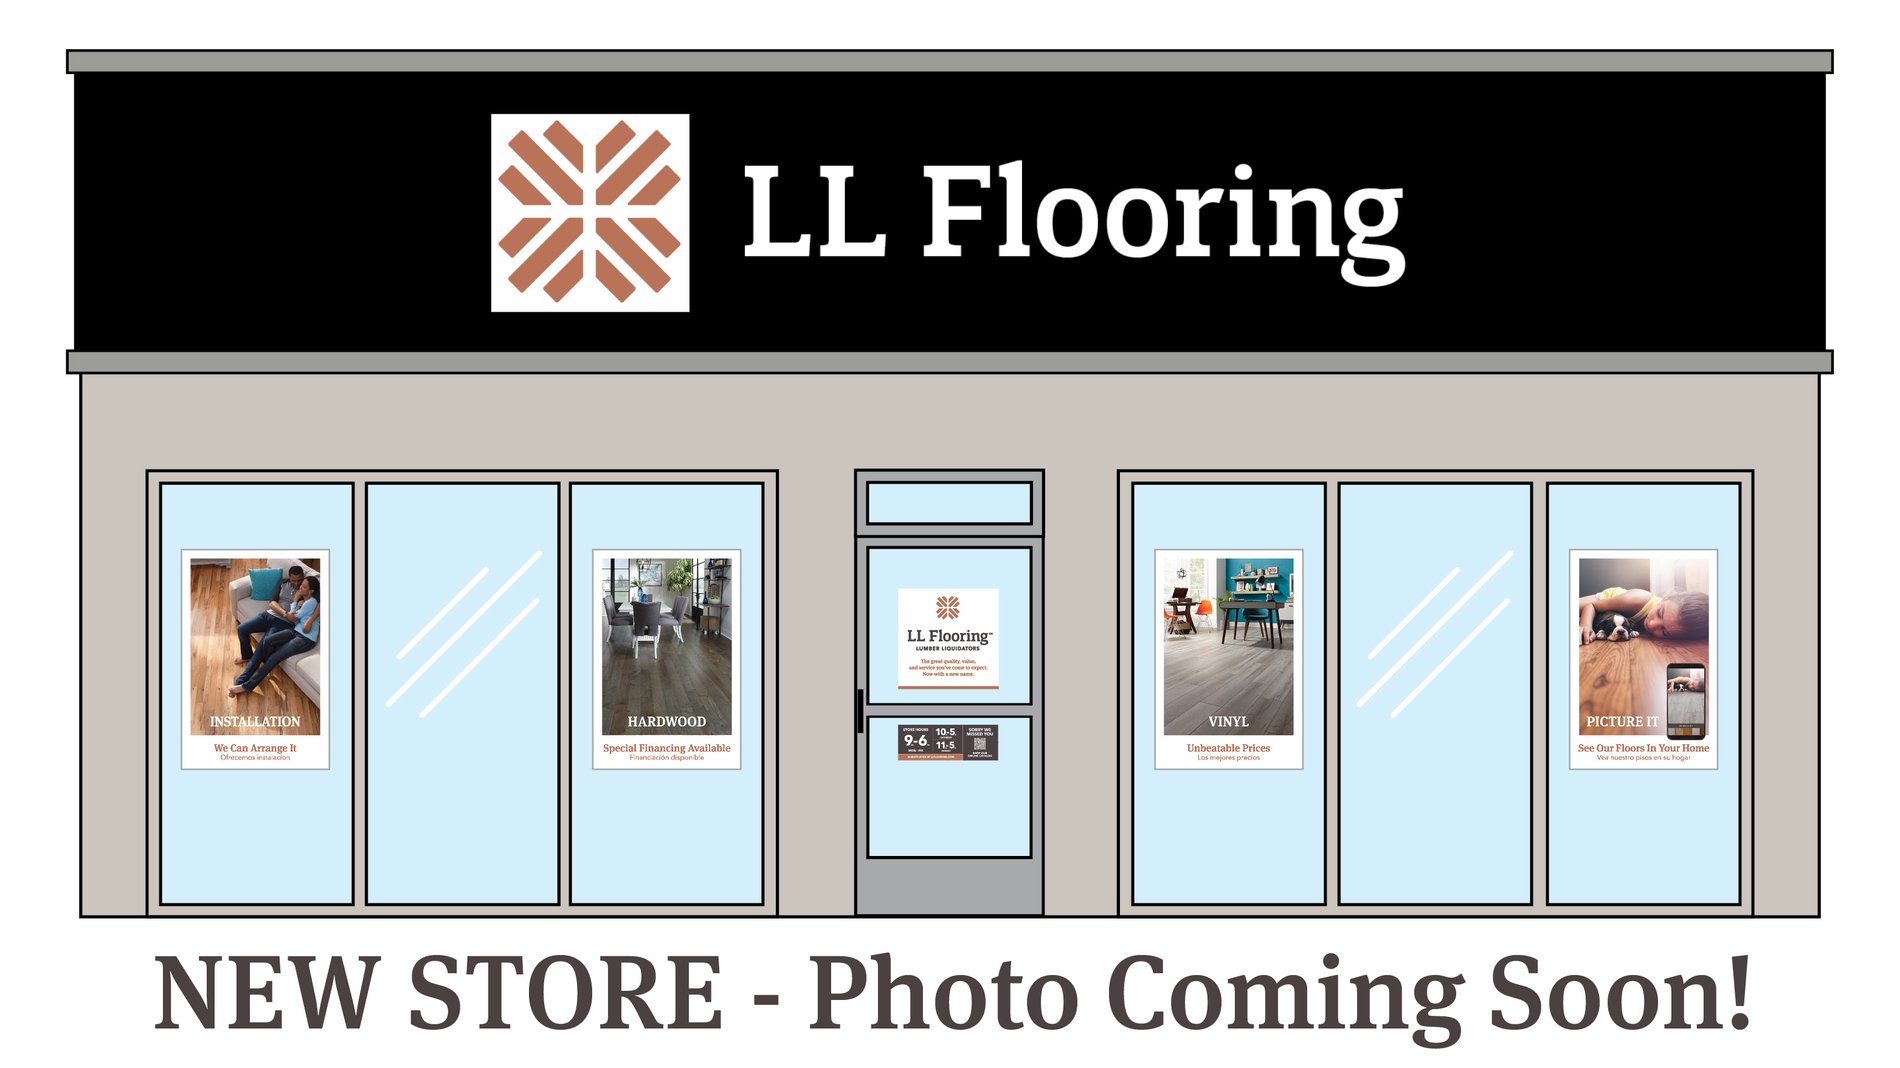 LL Flooring #1227 Geneva | 1530 South Randall Rd. | Storefront Photo Coming Soon